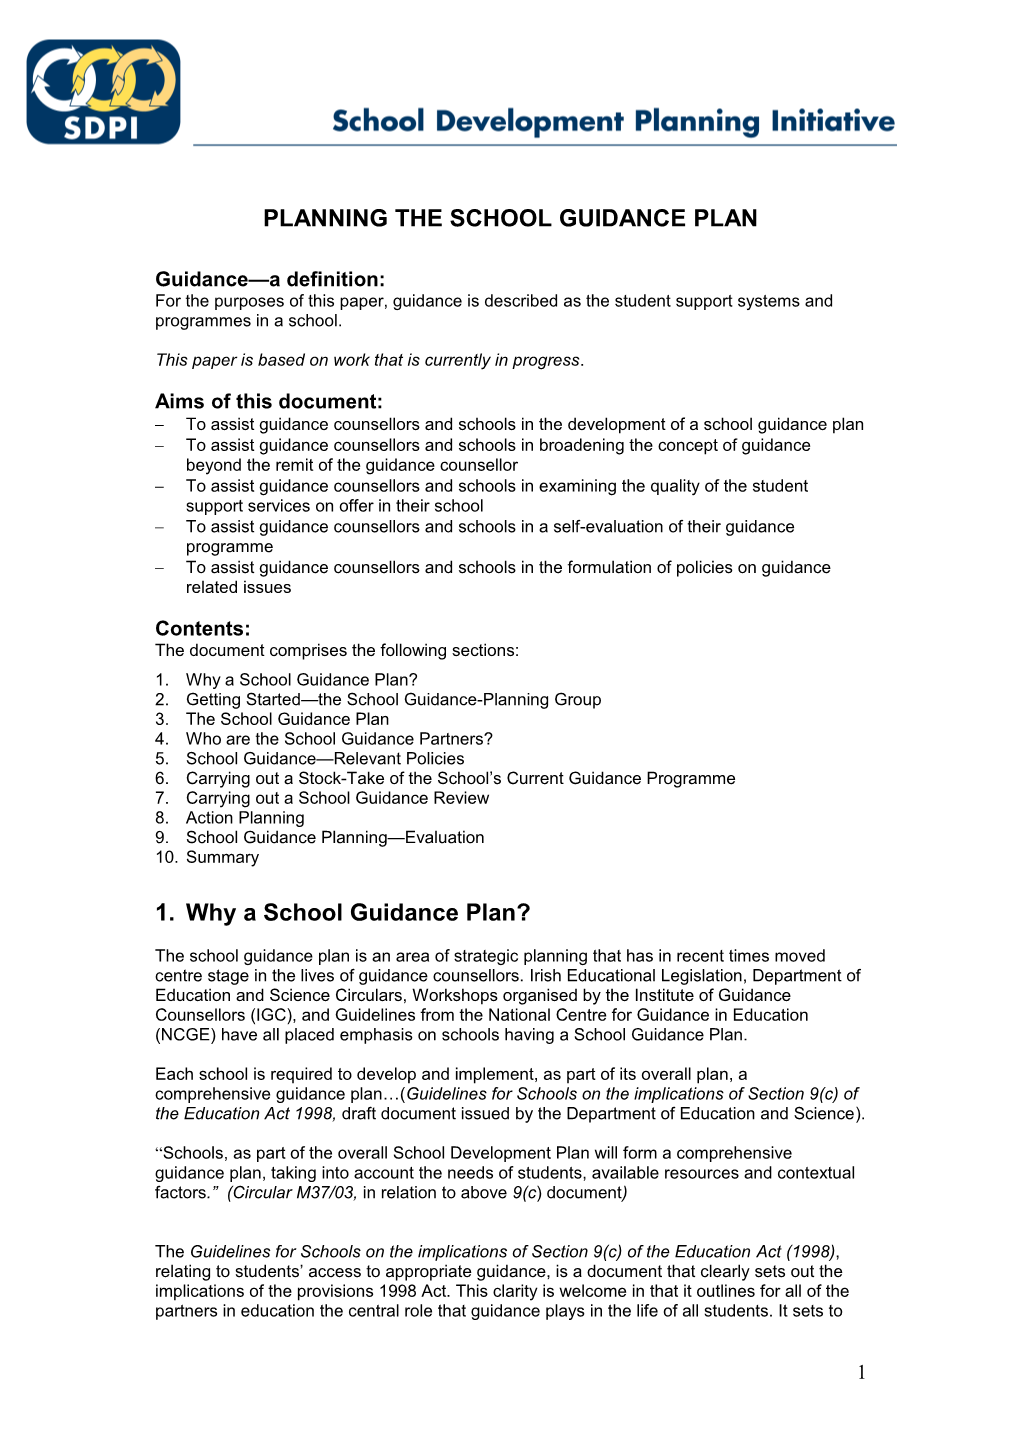 Planning the School Guidance Plan